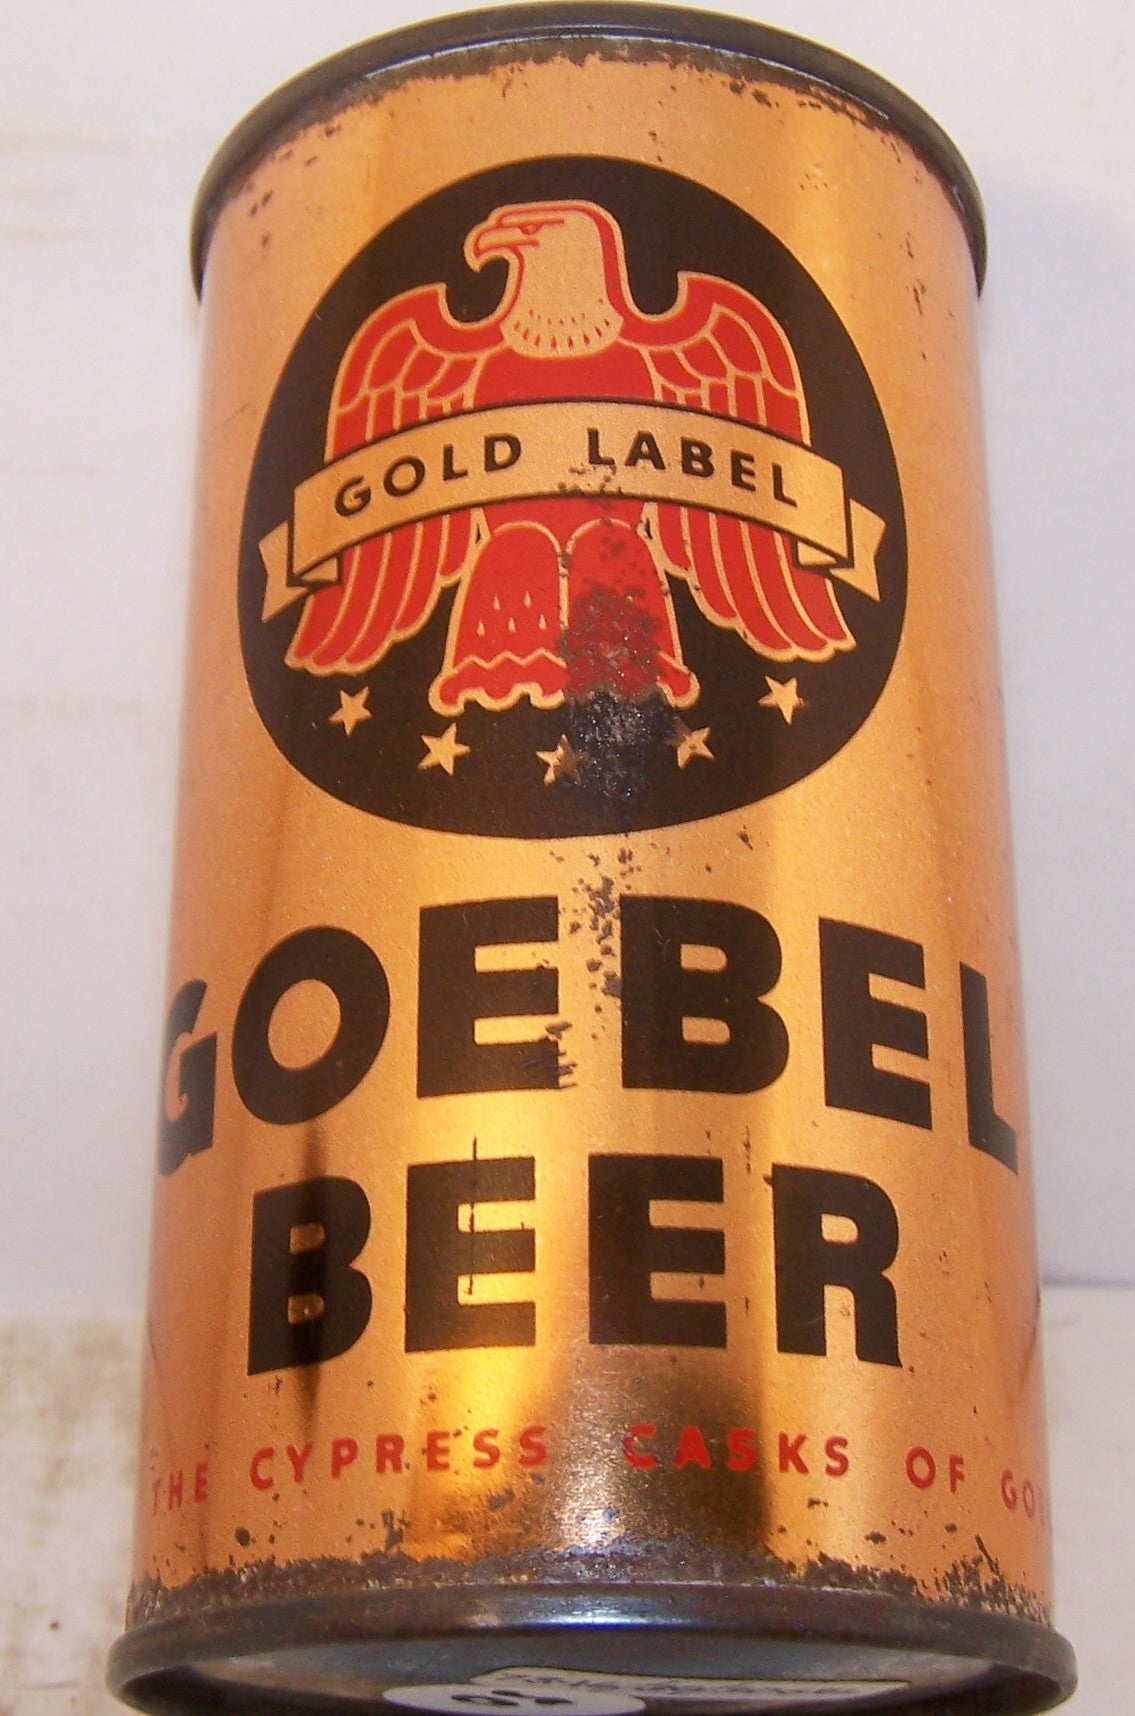 Goebel Gold Label Beer, Lilek page # 344, Grade 1- Sold 4/11/15